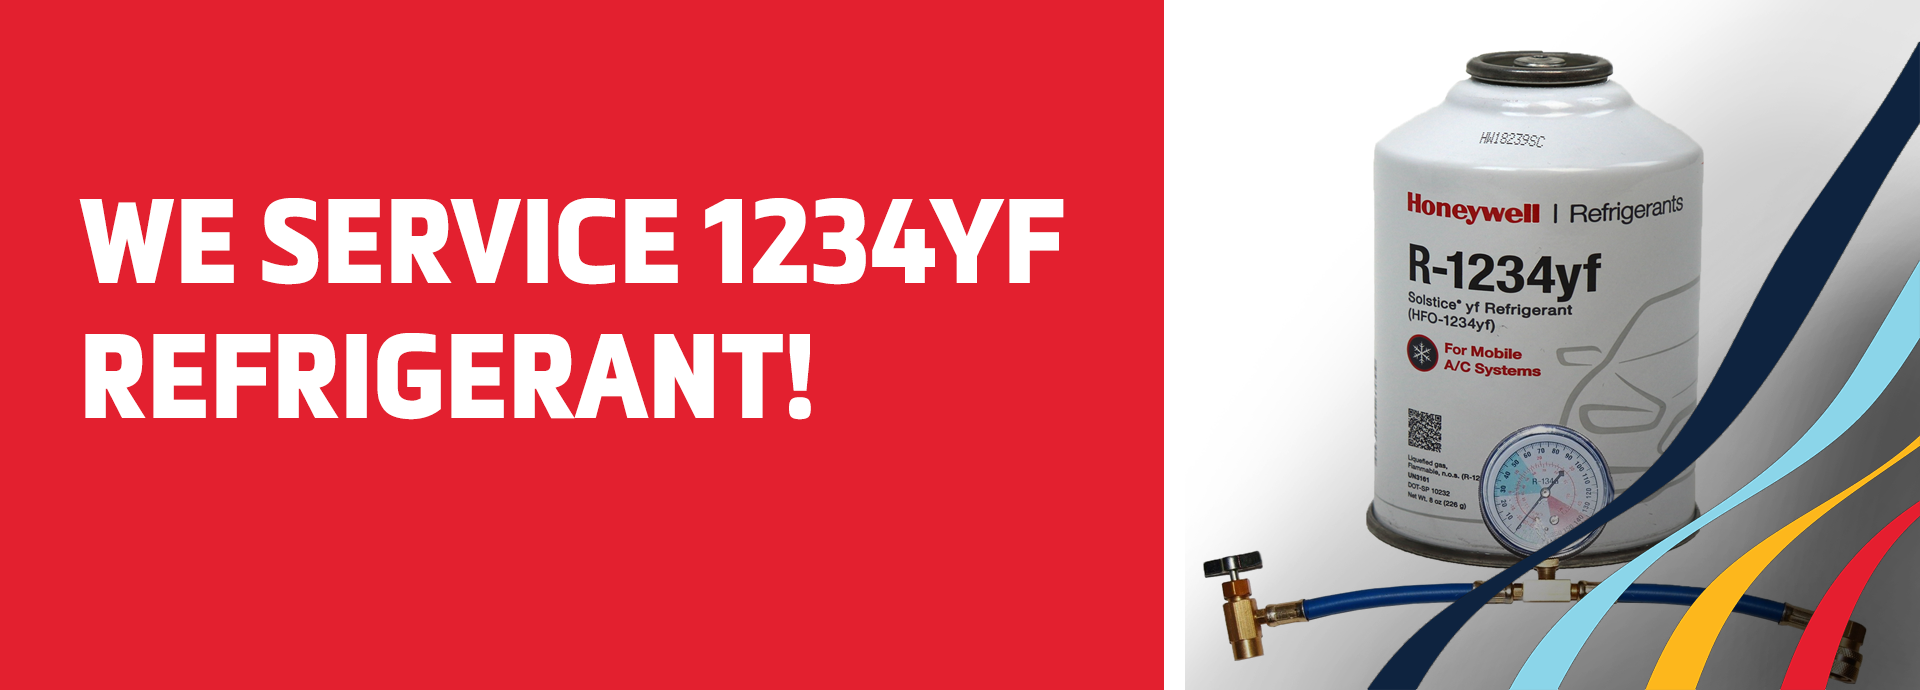 We Service 1234YF Refrigerant!